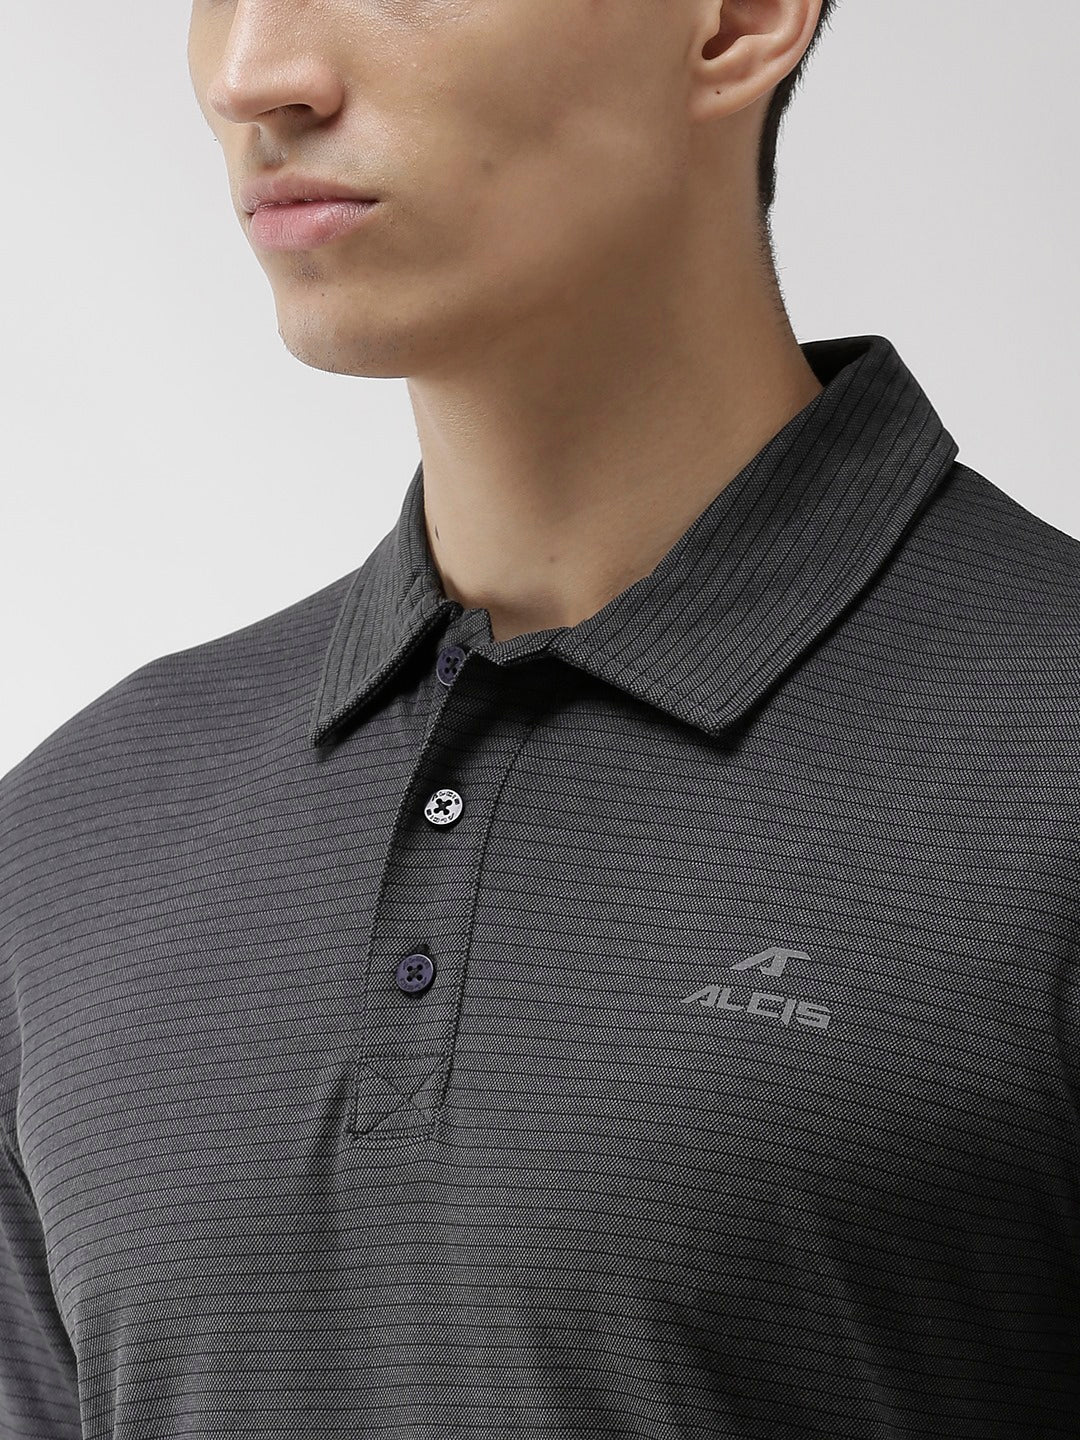 Alcis Men Charcoal Grey Striped  Polo Collar Training T-shirt